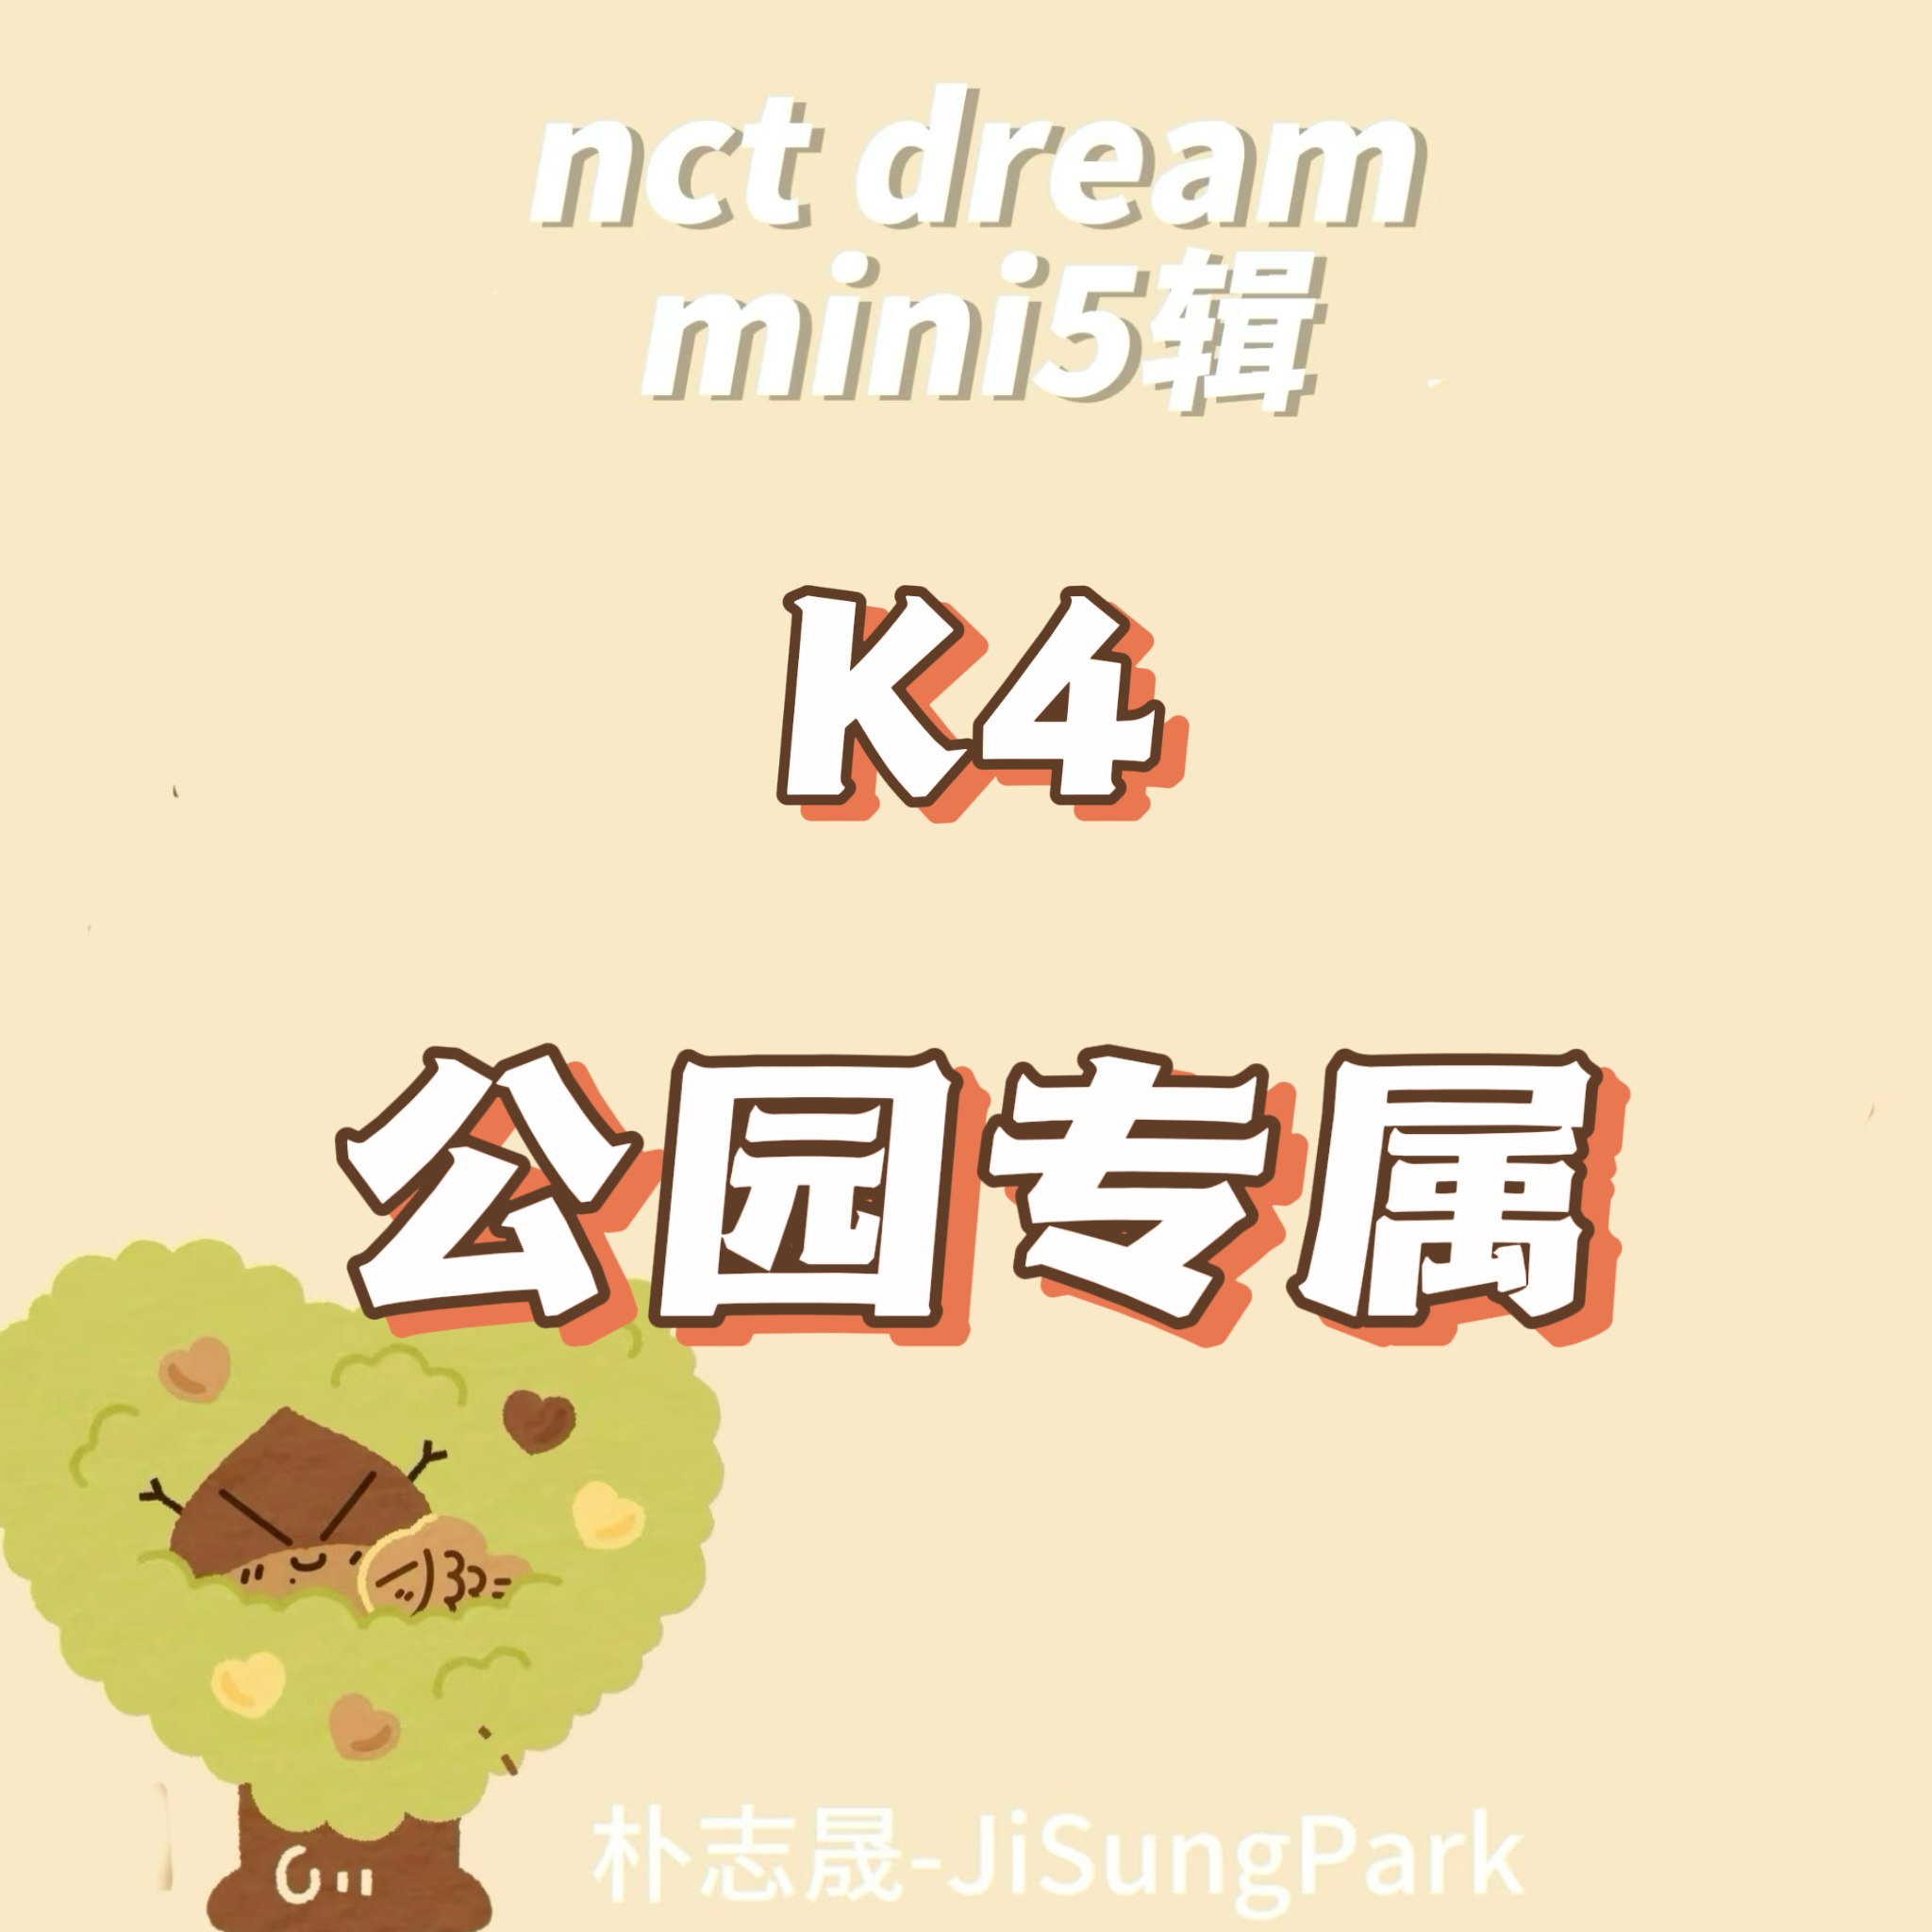 [全款 裸专] [公园专属] NCT DREAM - [DREAM( )SCAPE] (Photobook Ver.) (Random Ver.) _朴志晟吧_ParkJiSungBar